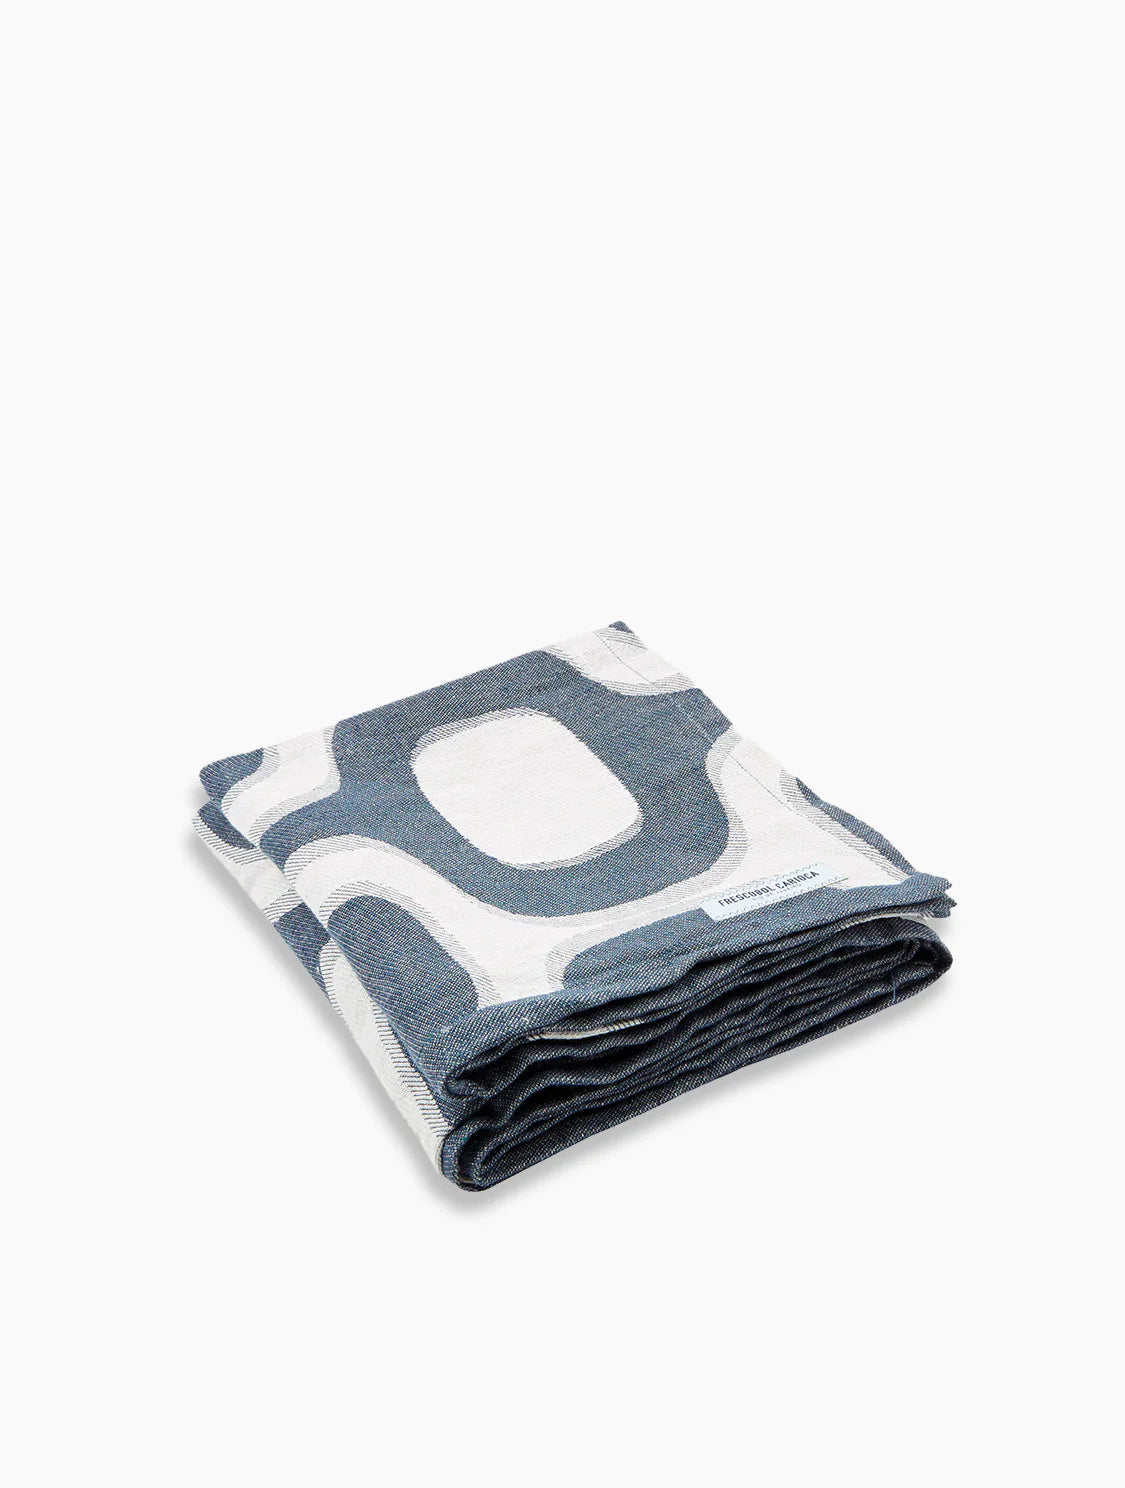 Cotton/Linen Towel - Jacquard Ipanema Nevoa Navy Blue - Cigale &amp;  Fourmi